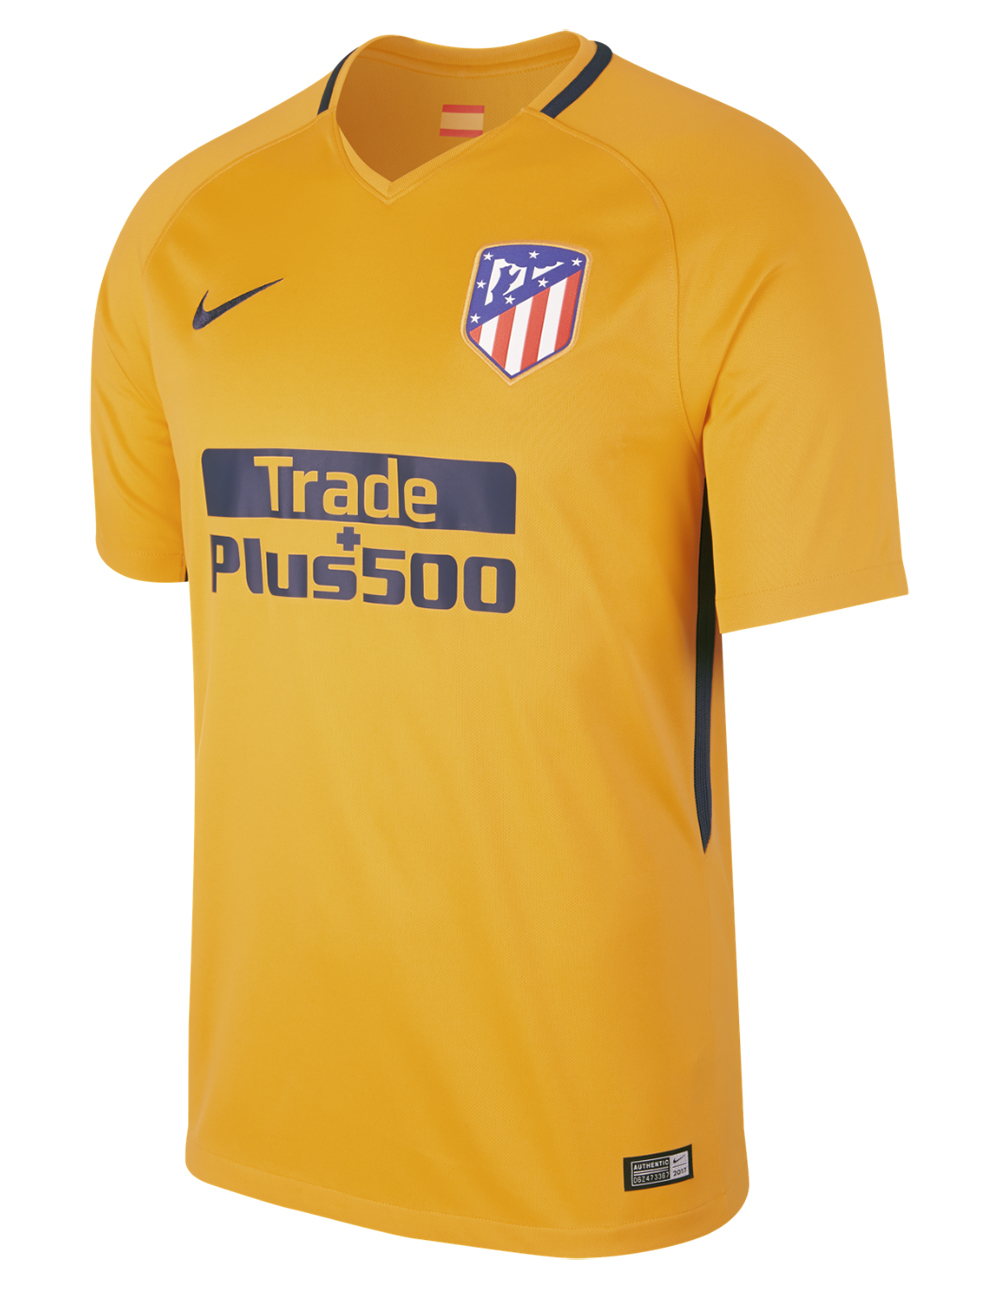 Camiseta alternativa Nike del Atlético Madrid 2017 18